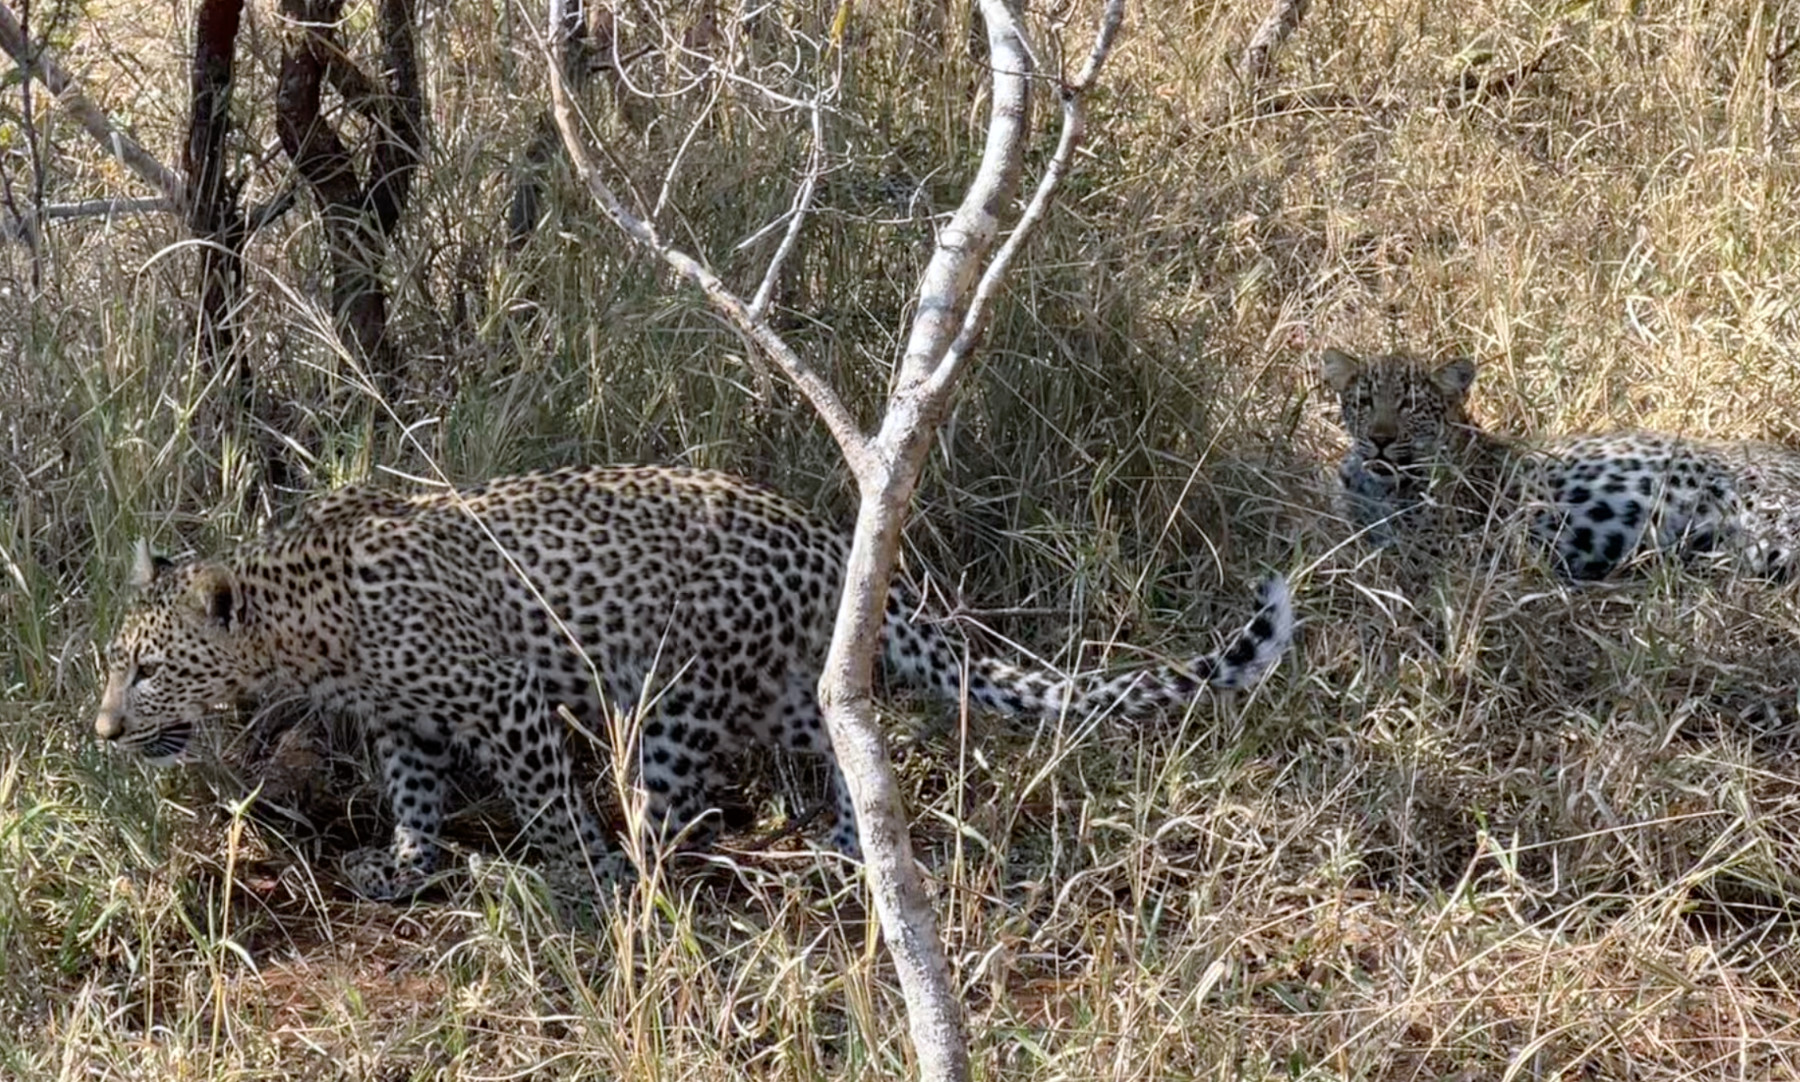 Leopard pair